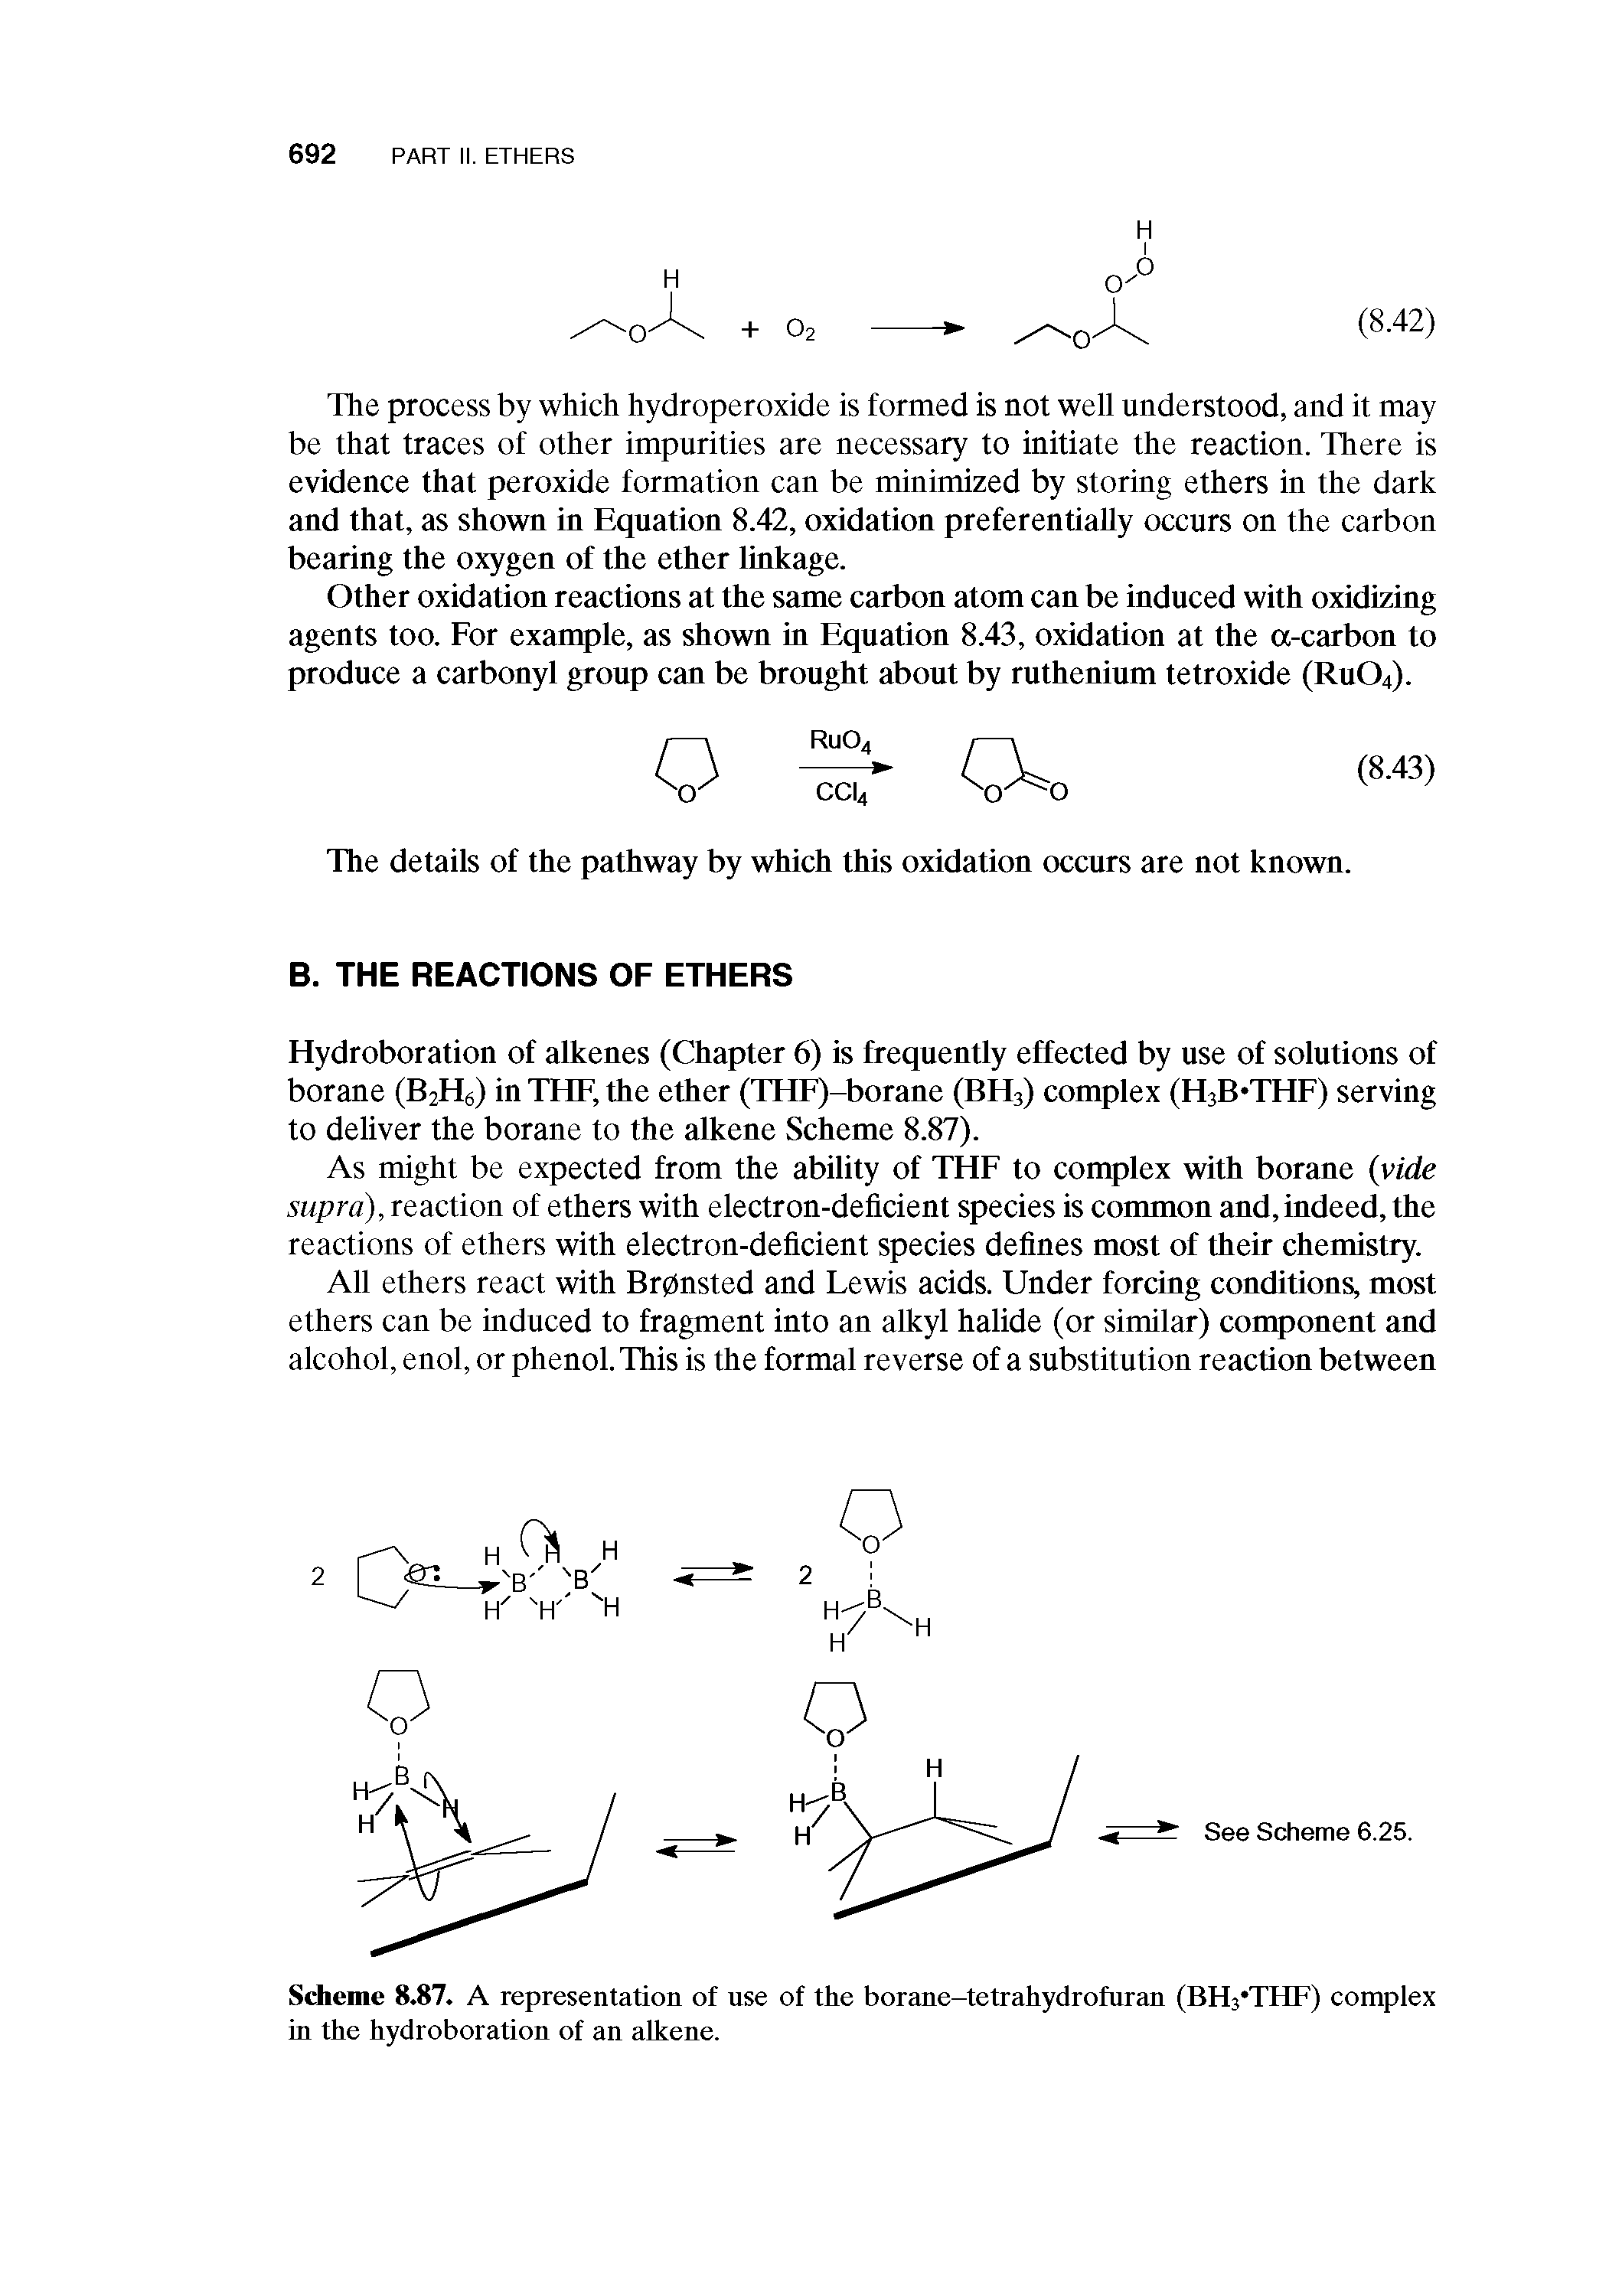 Scheme 8.87. A representation of use of the borane-tetrahydrofuran (BHj THF) complex in the hydroboration of an alkene.